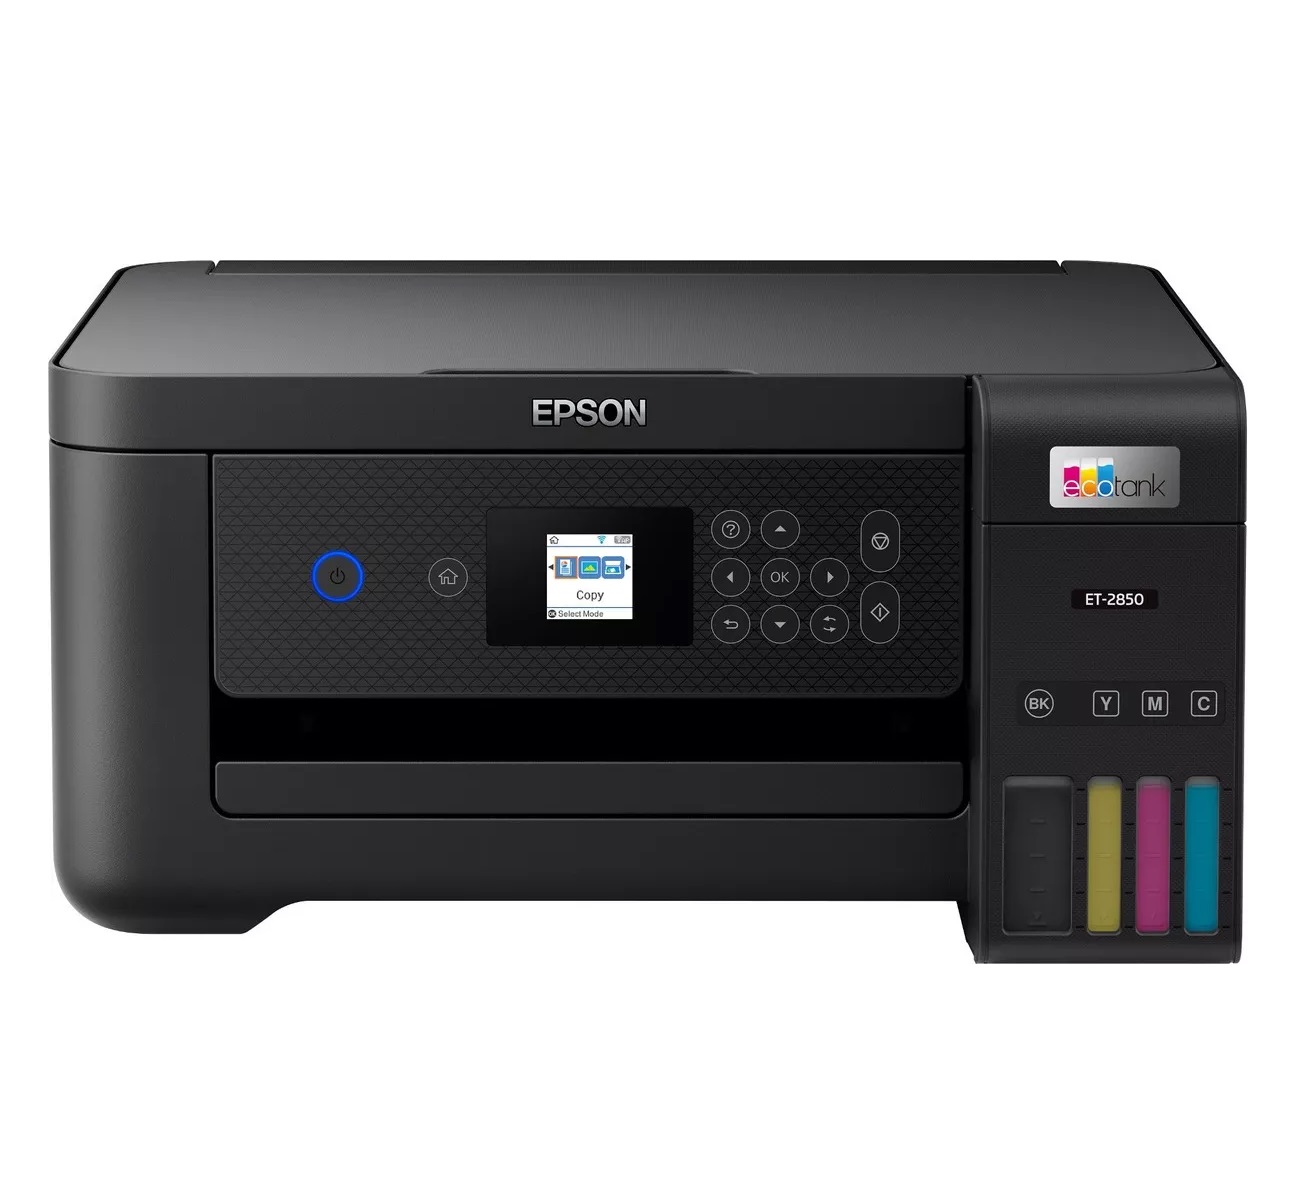 Impresora Multifuncional Tinta Continua Epson Ecotank Et 2850